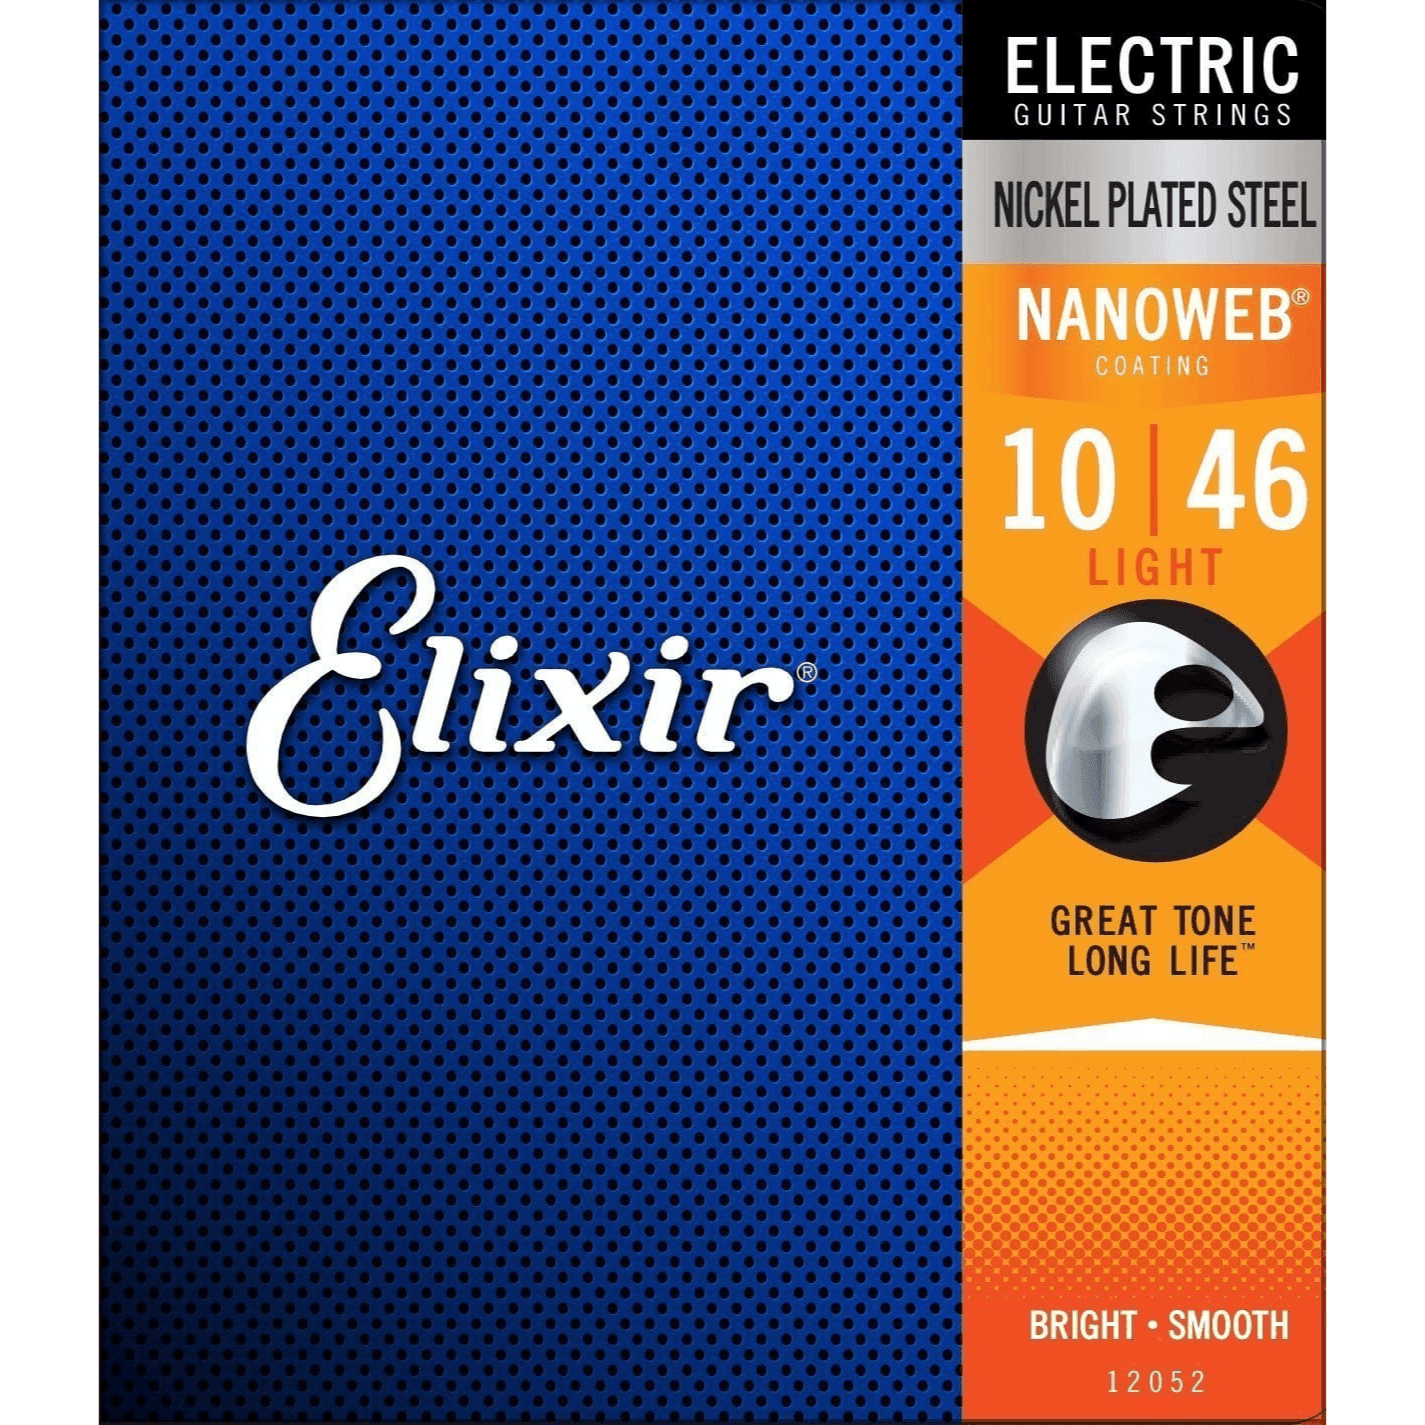 Elixir 10/46 Electric Guitar Strings Nanoweb - Strings - Electric Guitar by Elixir at Muso's Stuff